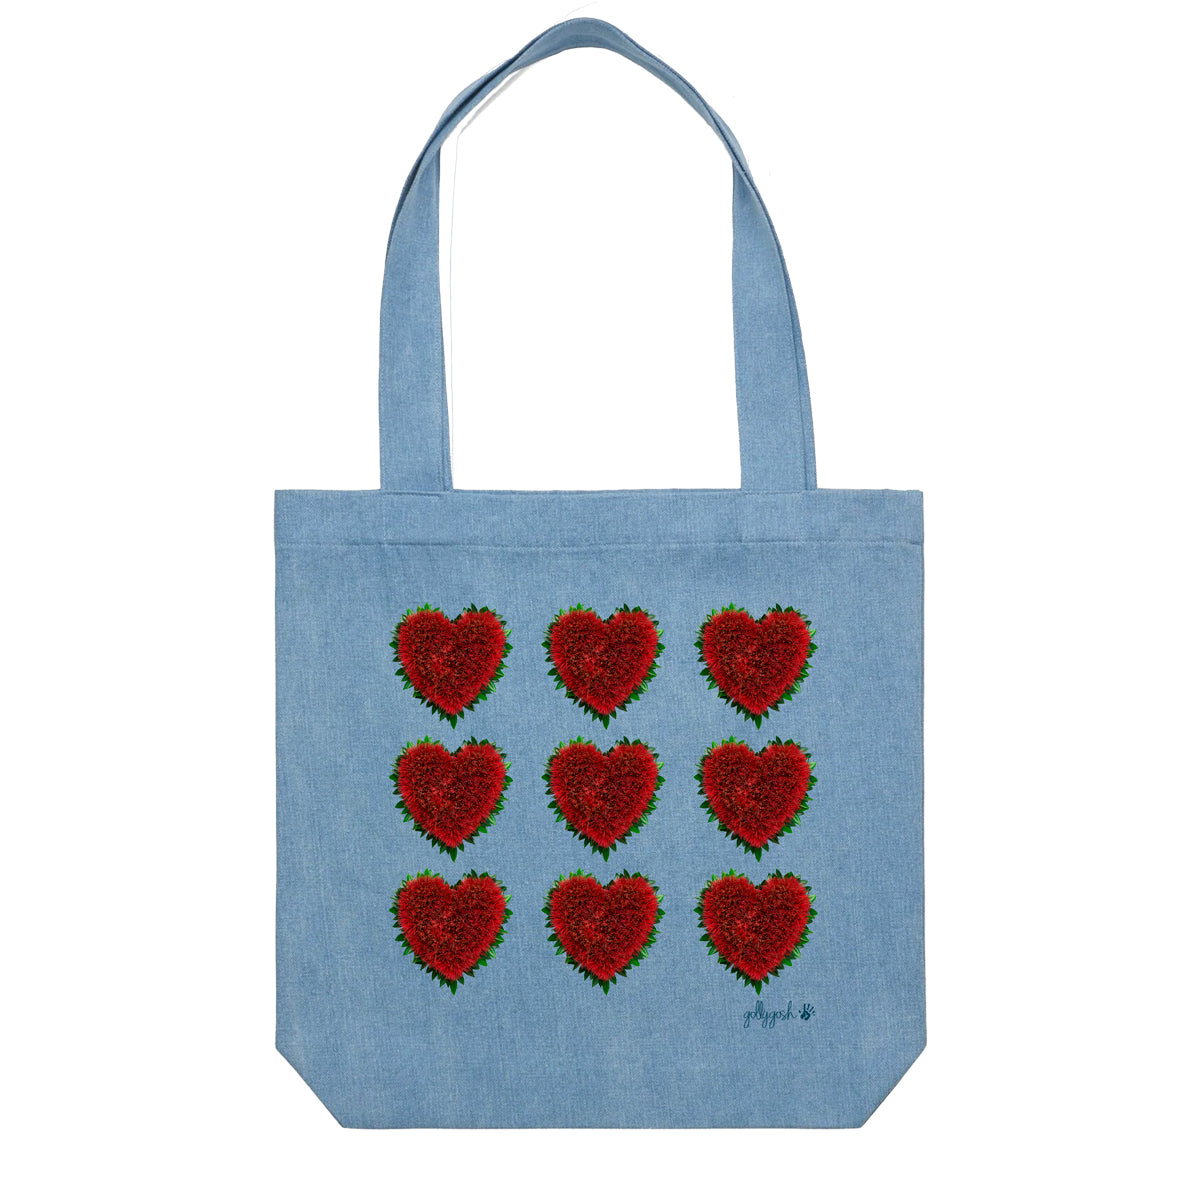 Pohutukawa Hearts Tote Bag